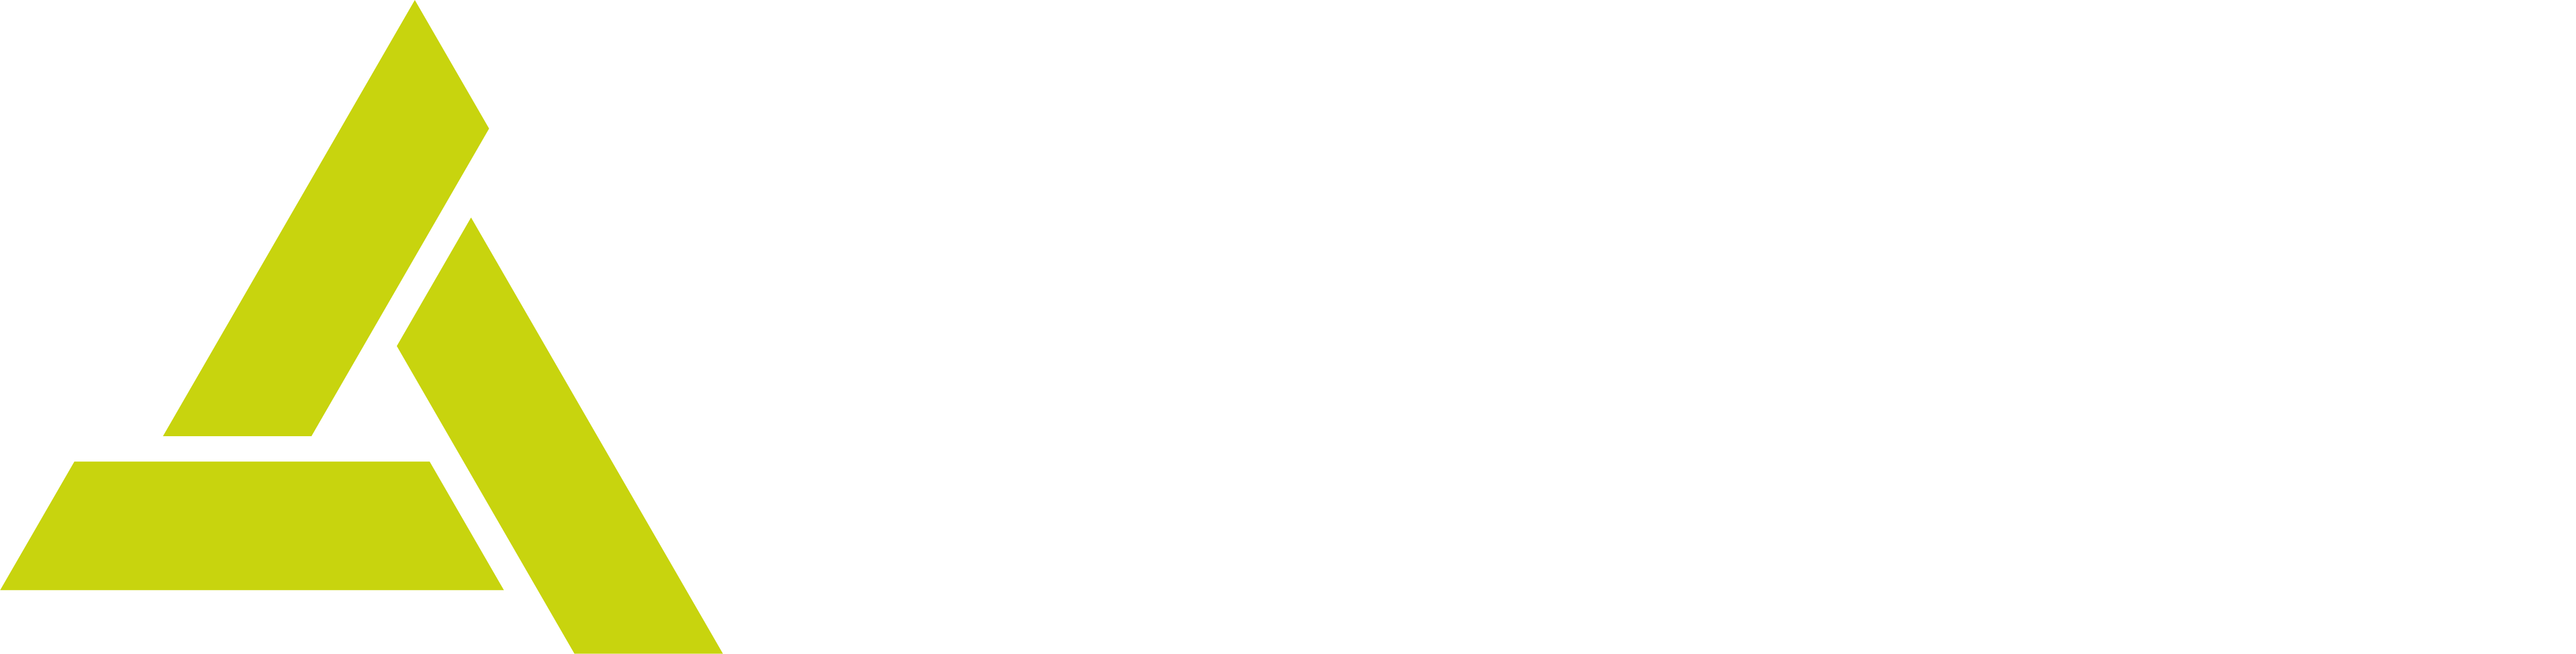 Box Base9